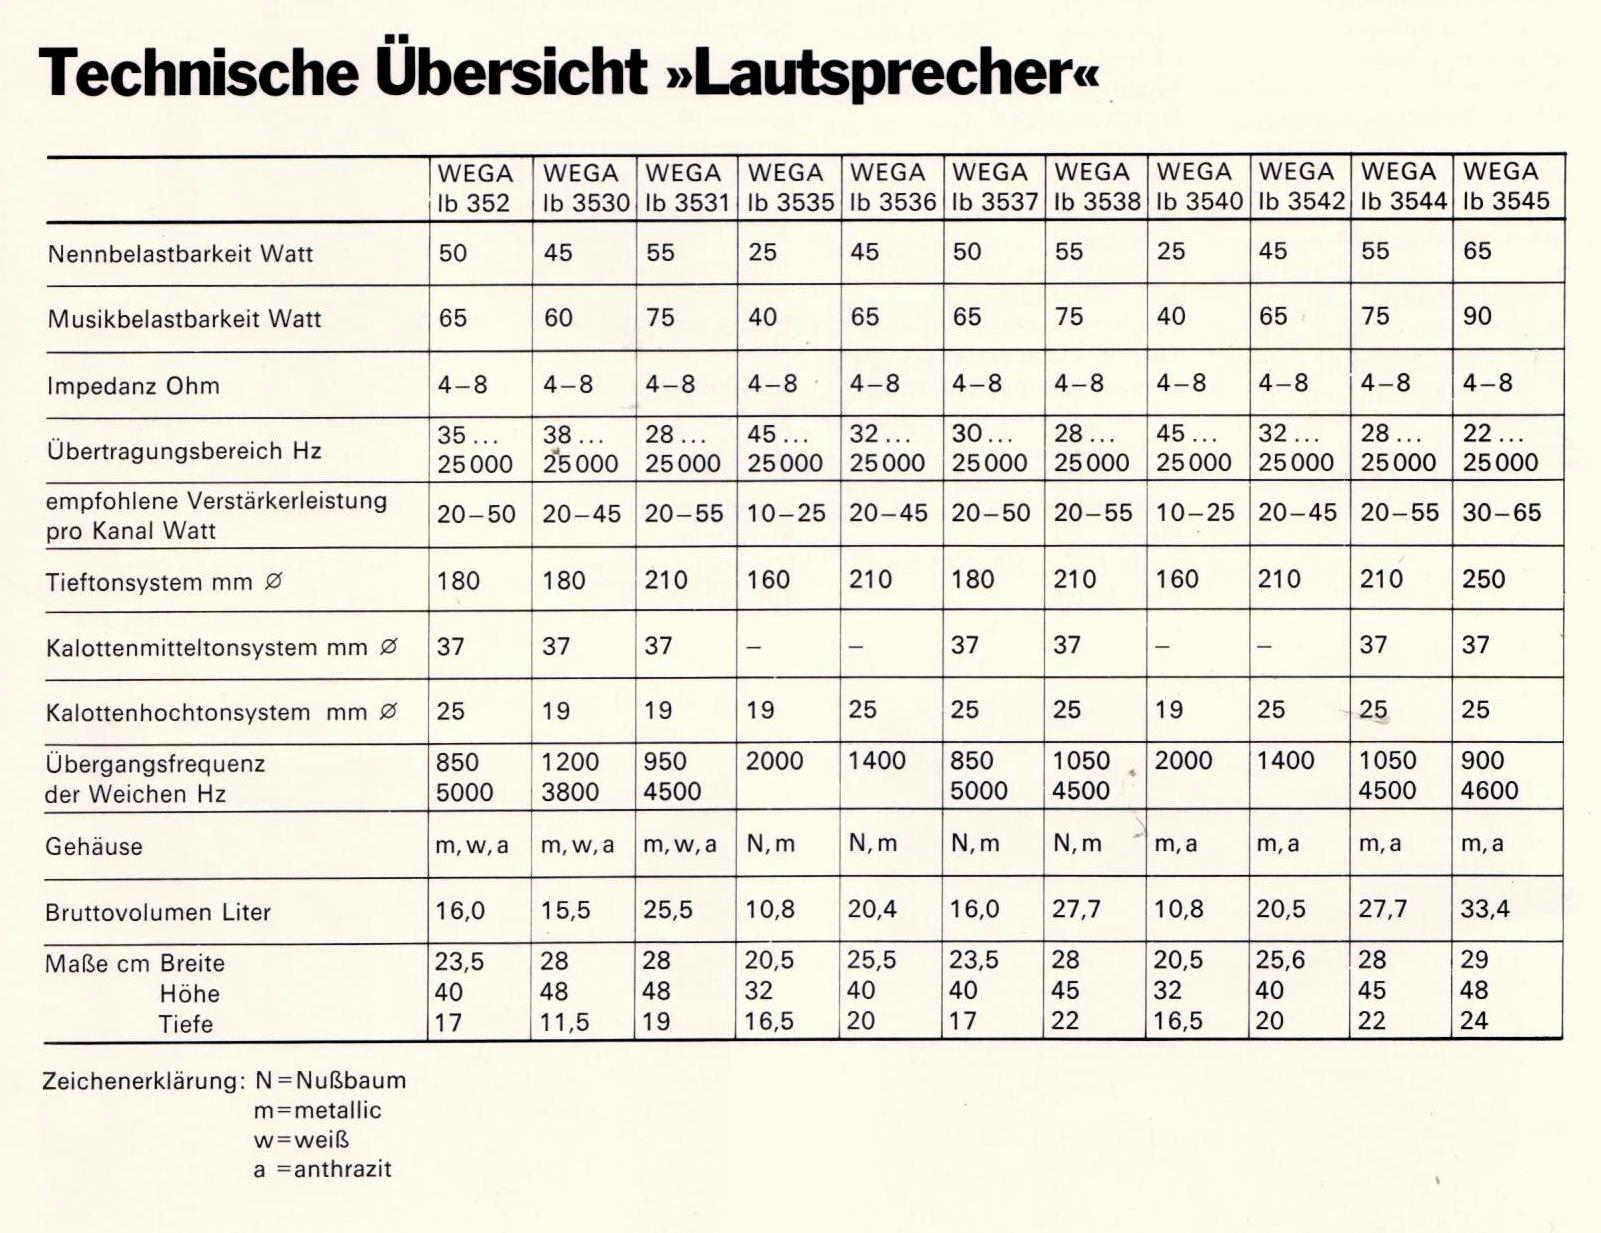 Wega Lautsprecher 1975-Daten.jpg